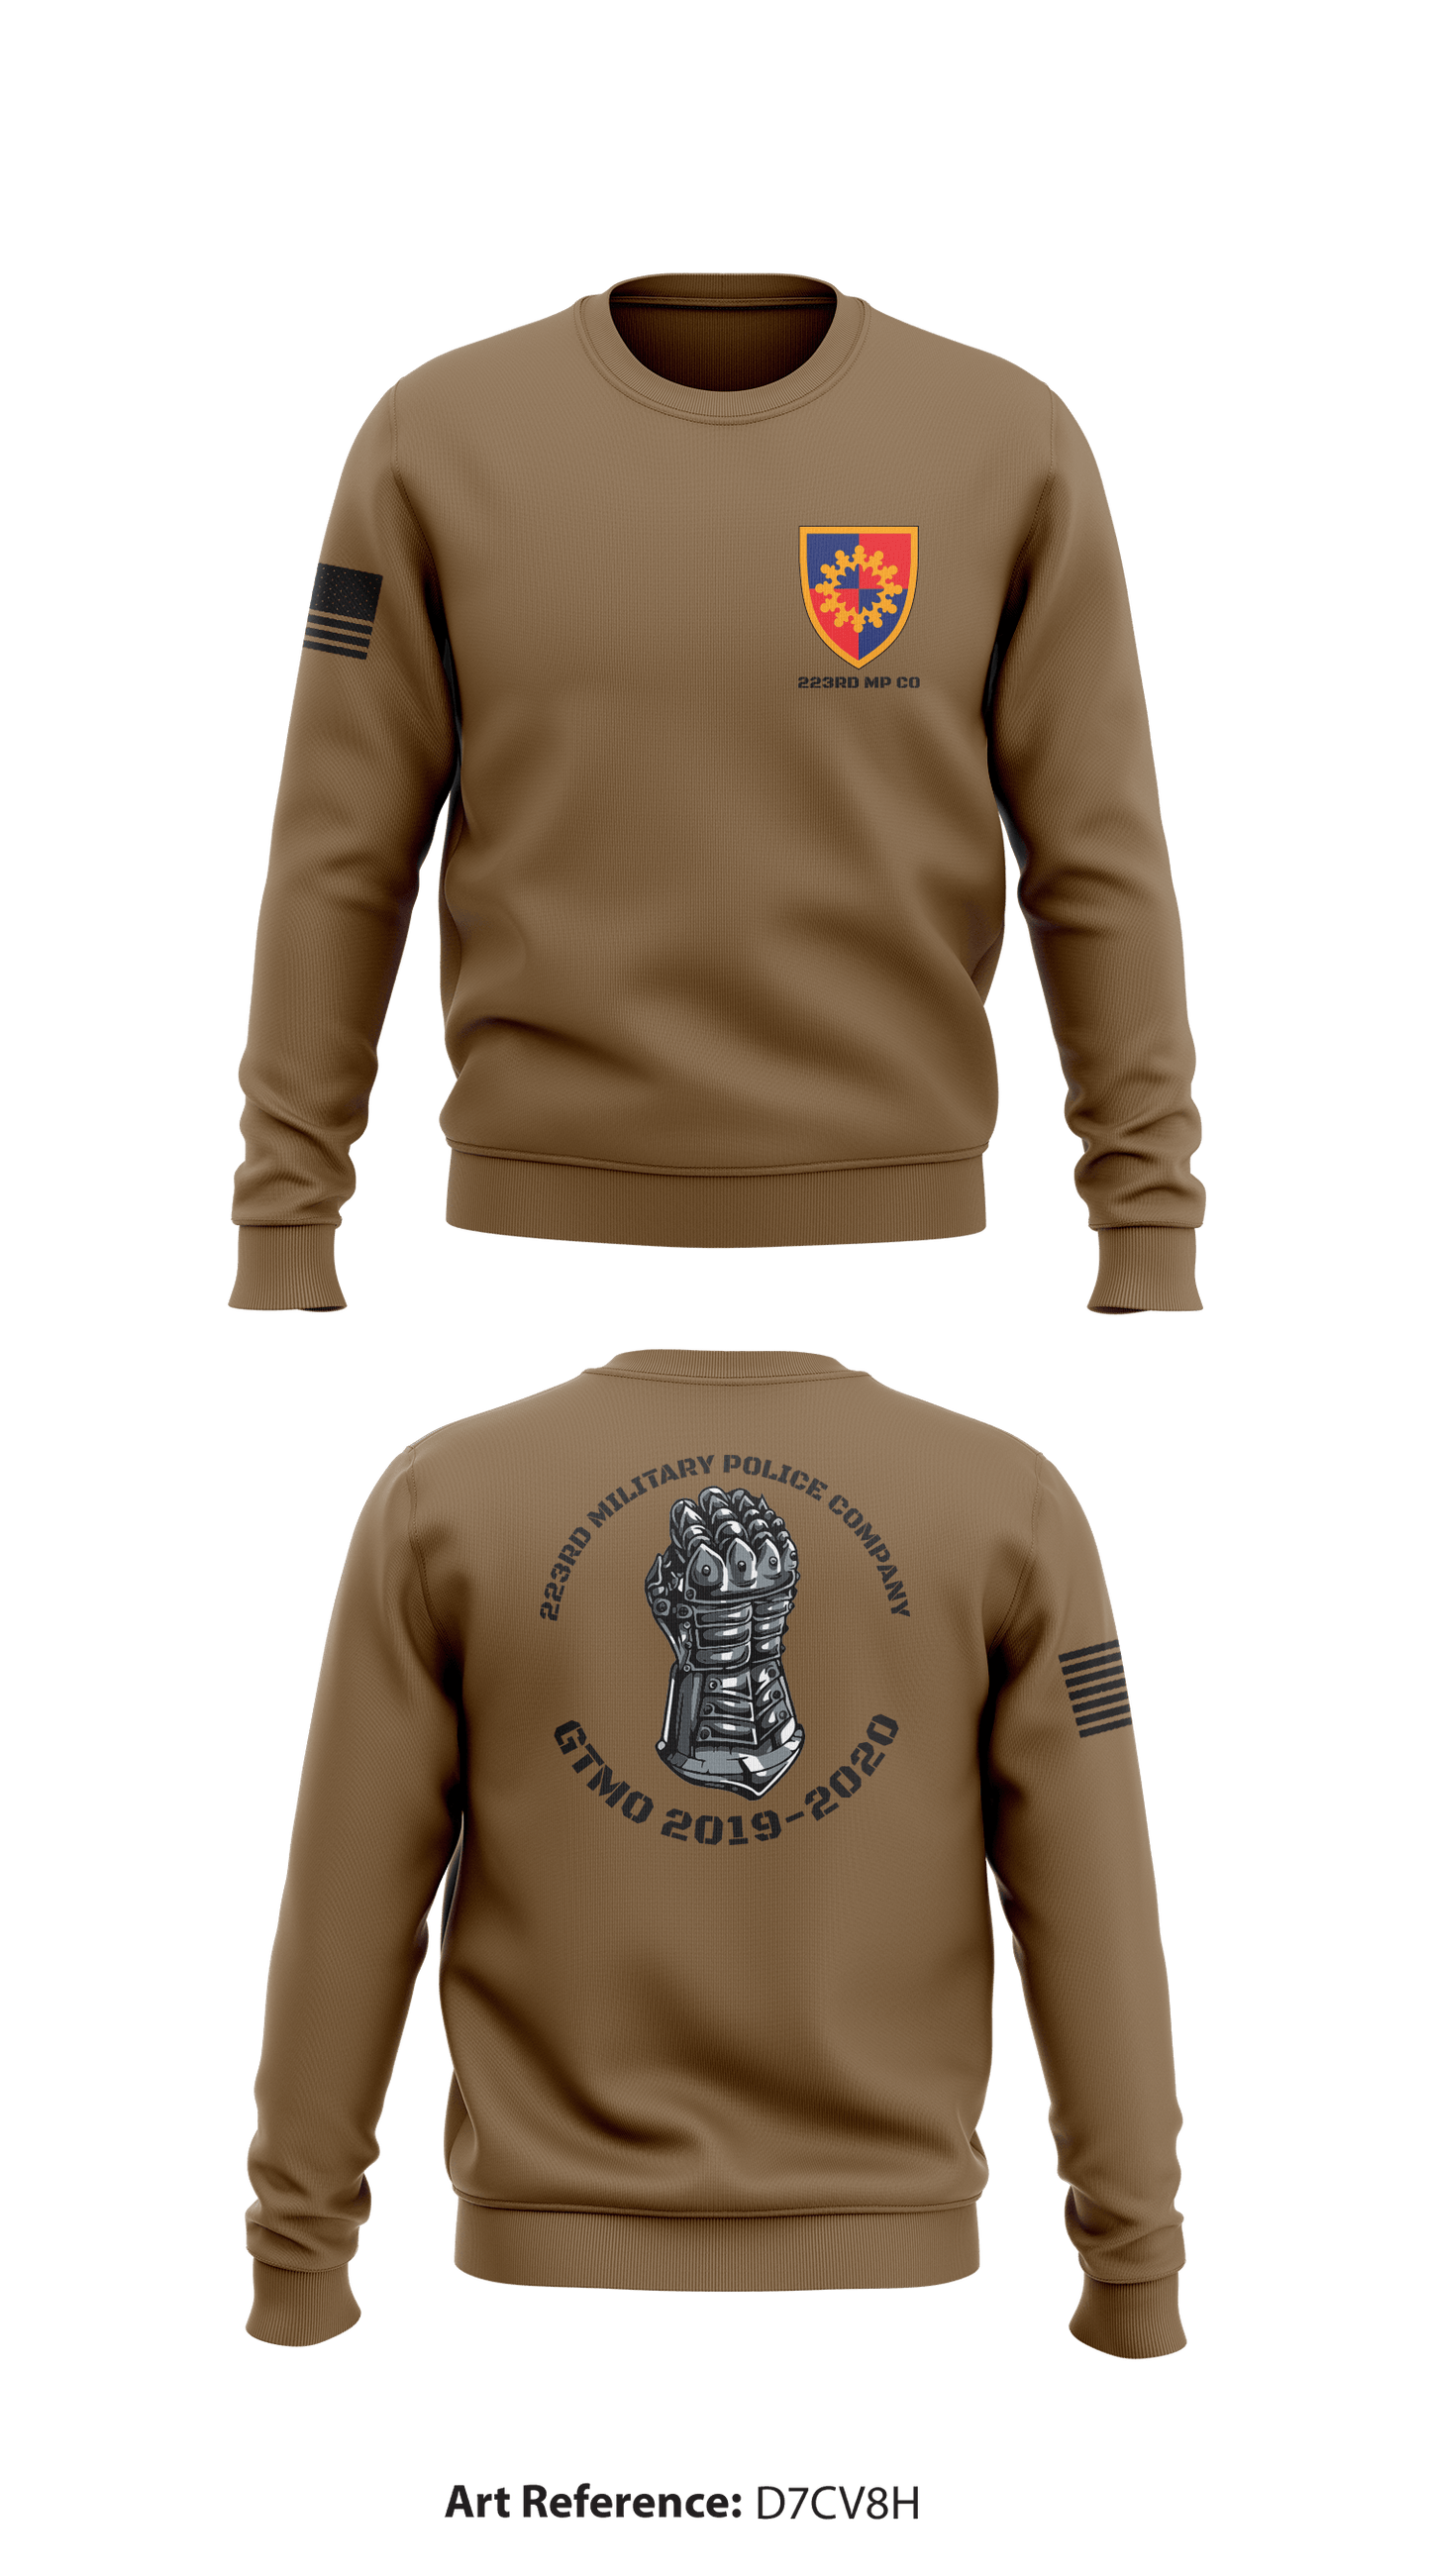 223rd Military Police Company Store 1 Core Men's Crewneck Performance Sweatshirt - d7cV8h